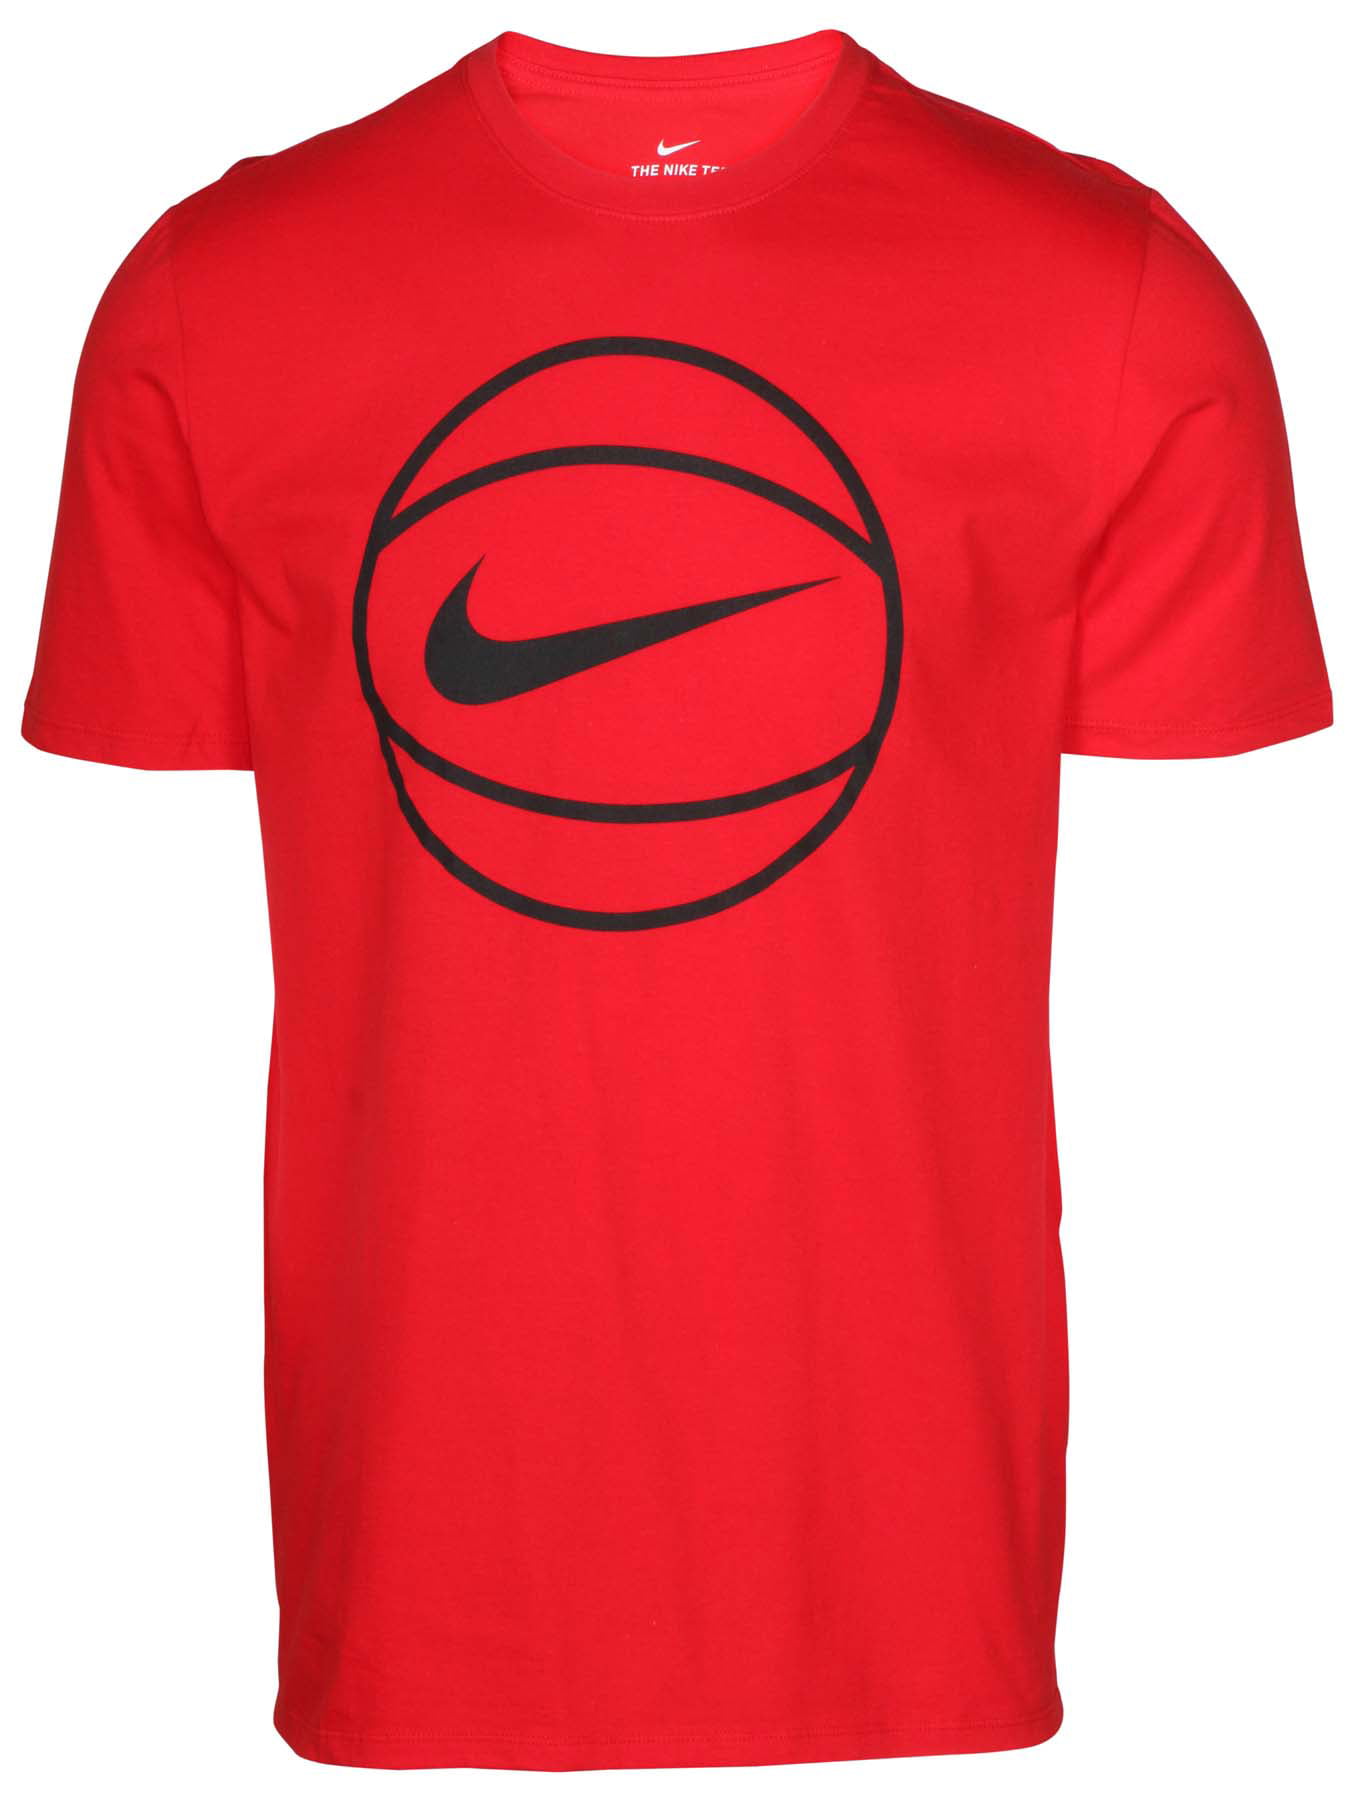 Nike - Nike Men's Summer Wash Basketball T-Shirt-Red - Walmart.com - Walmart.com